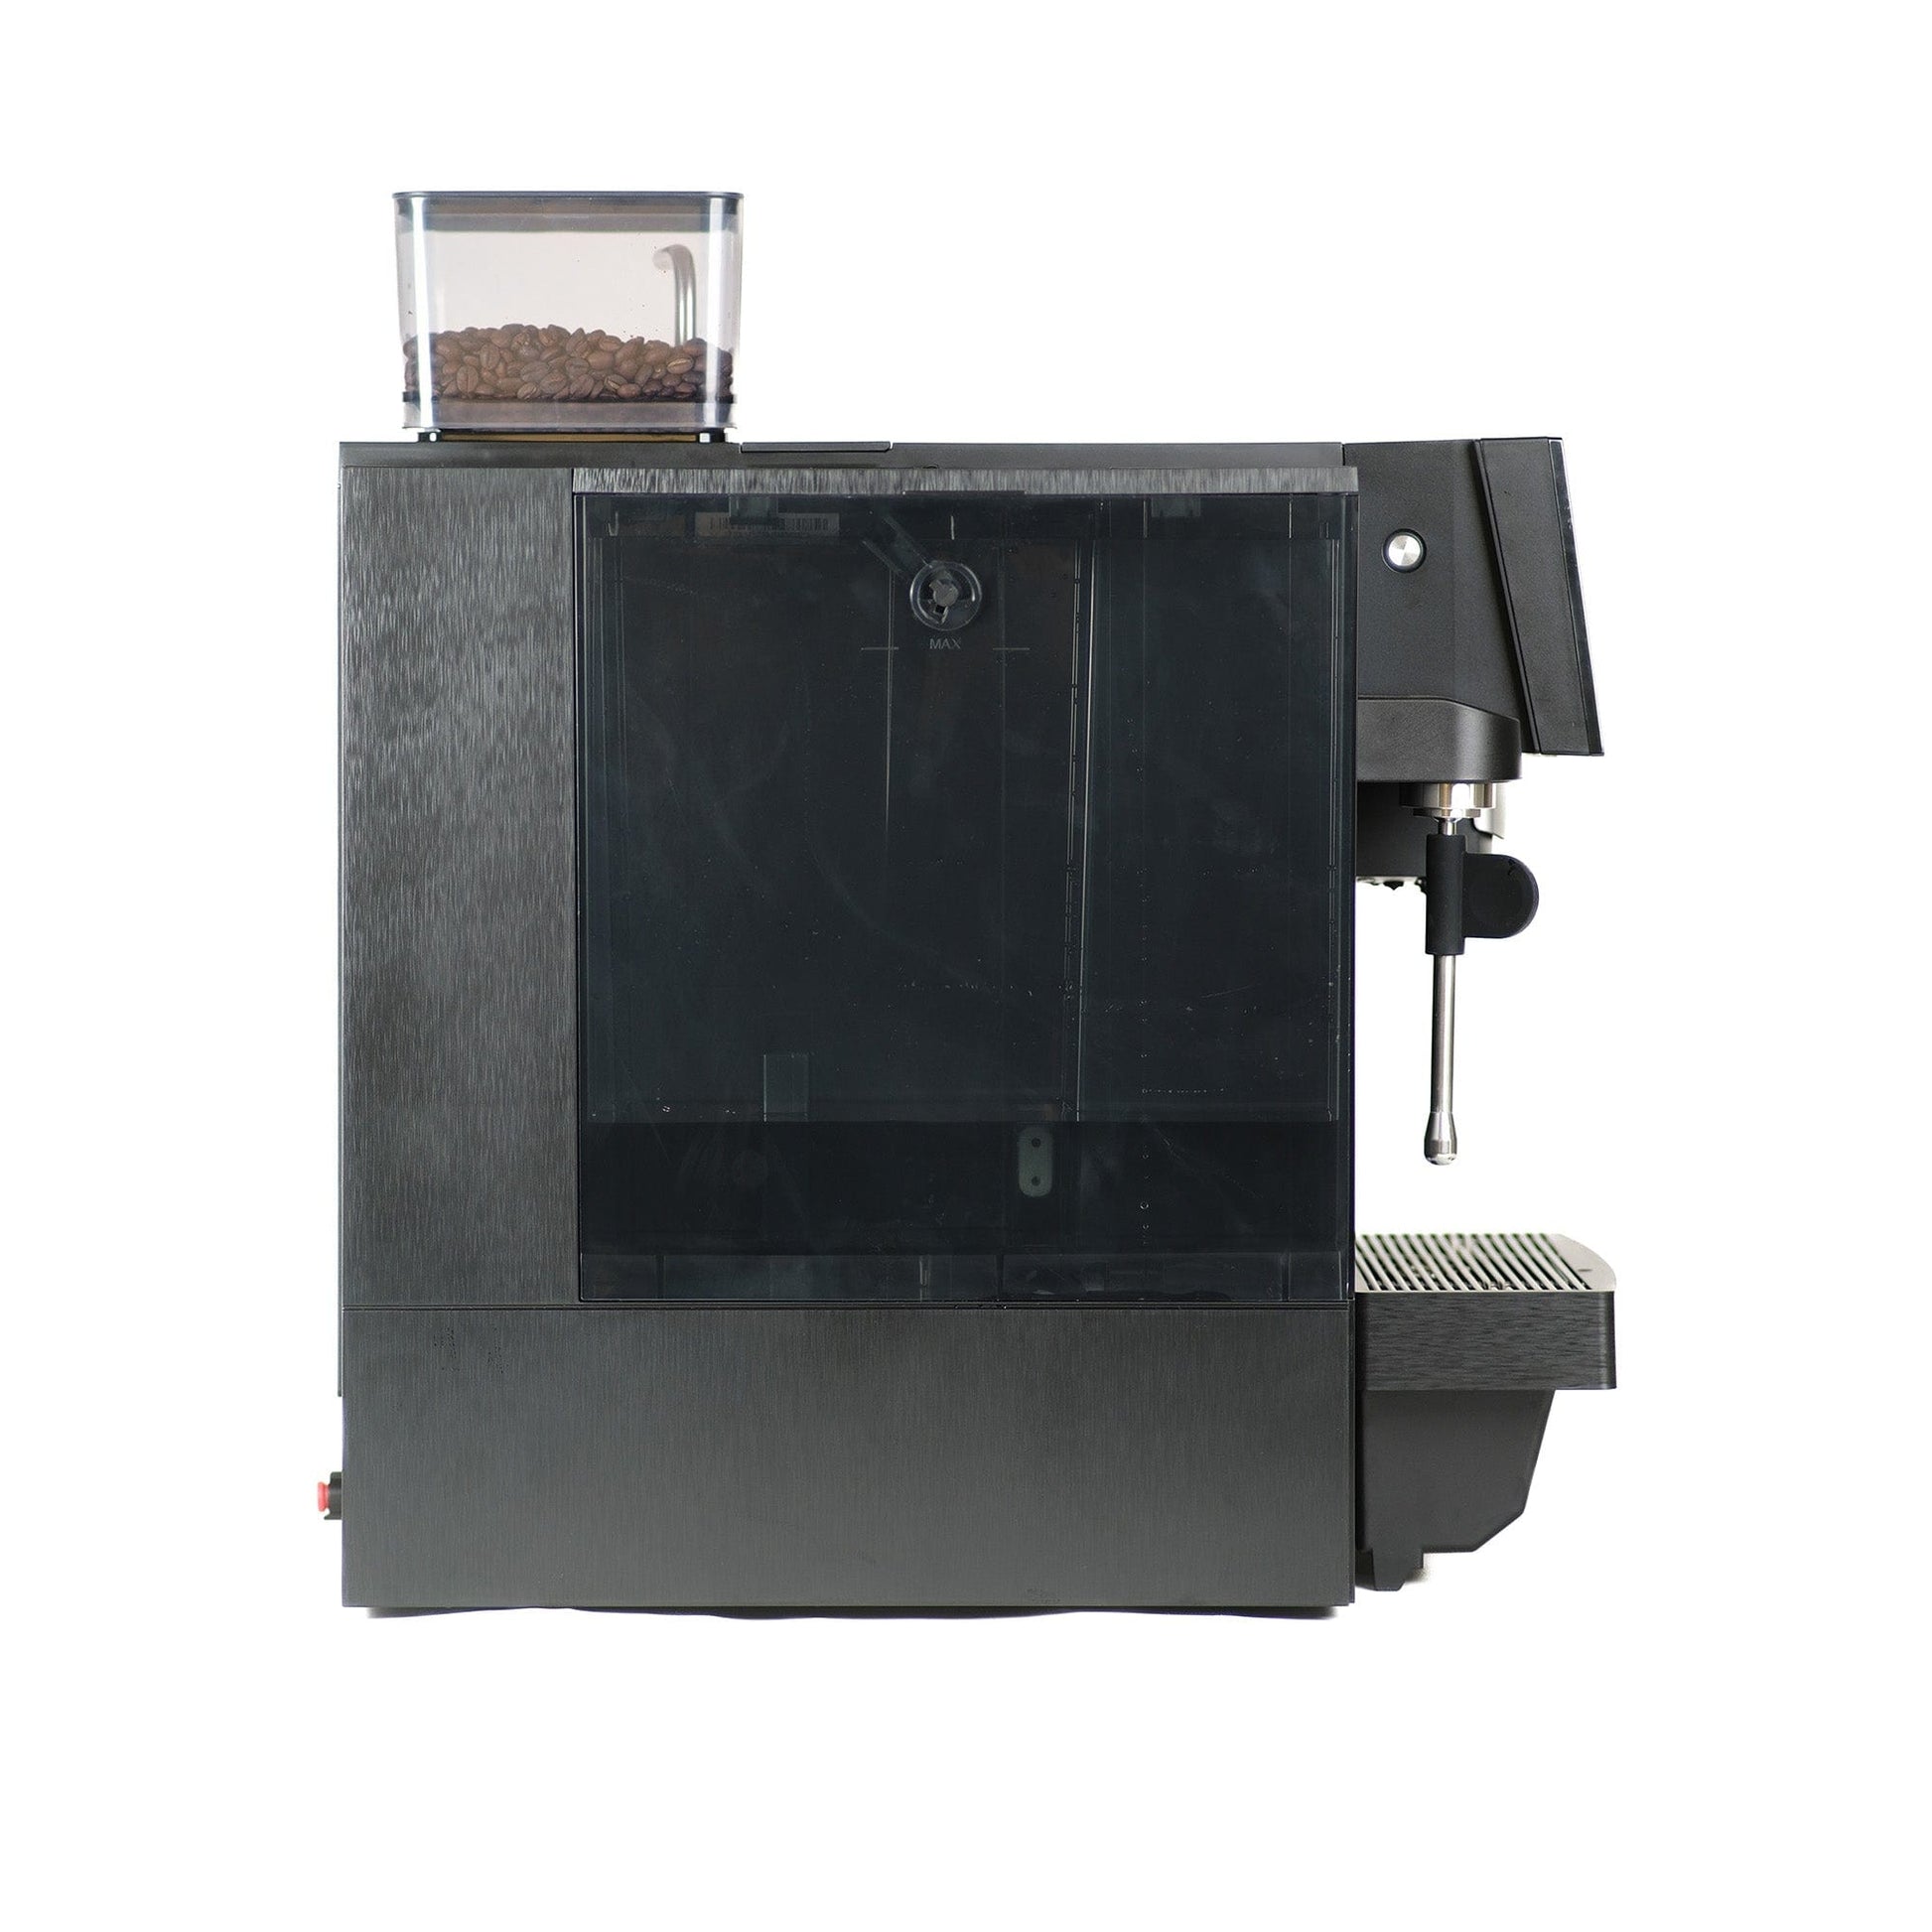 Budan Fully-automatic machine Budan M100 Professional Coffee Machine/Steam wand